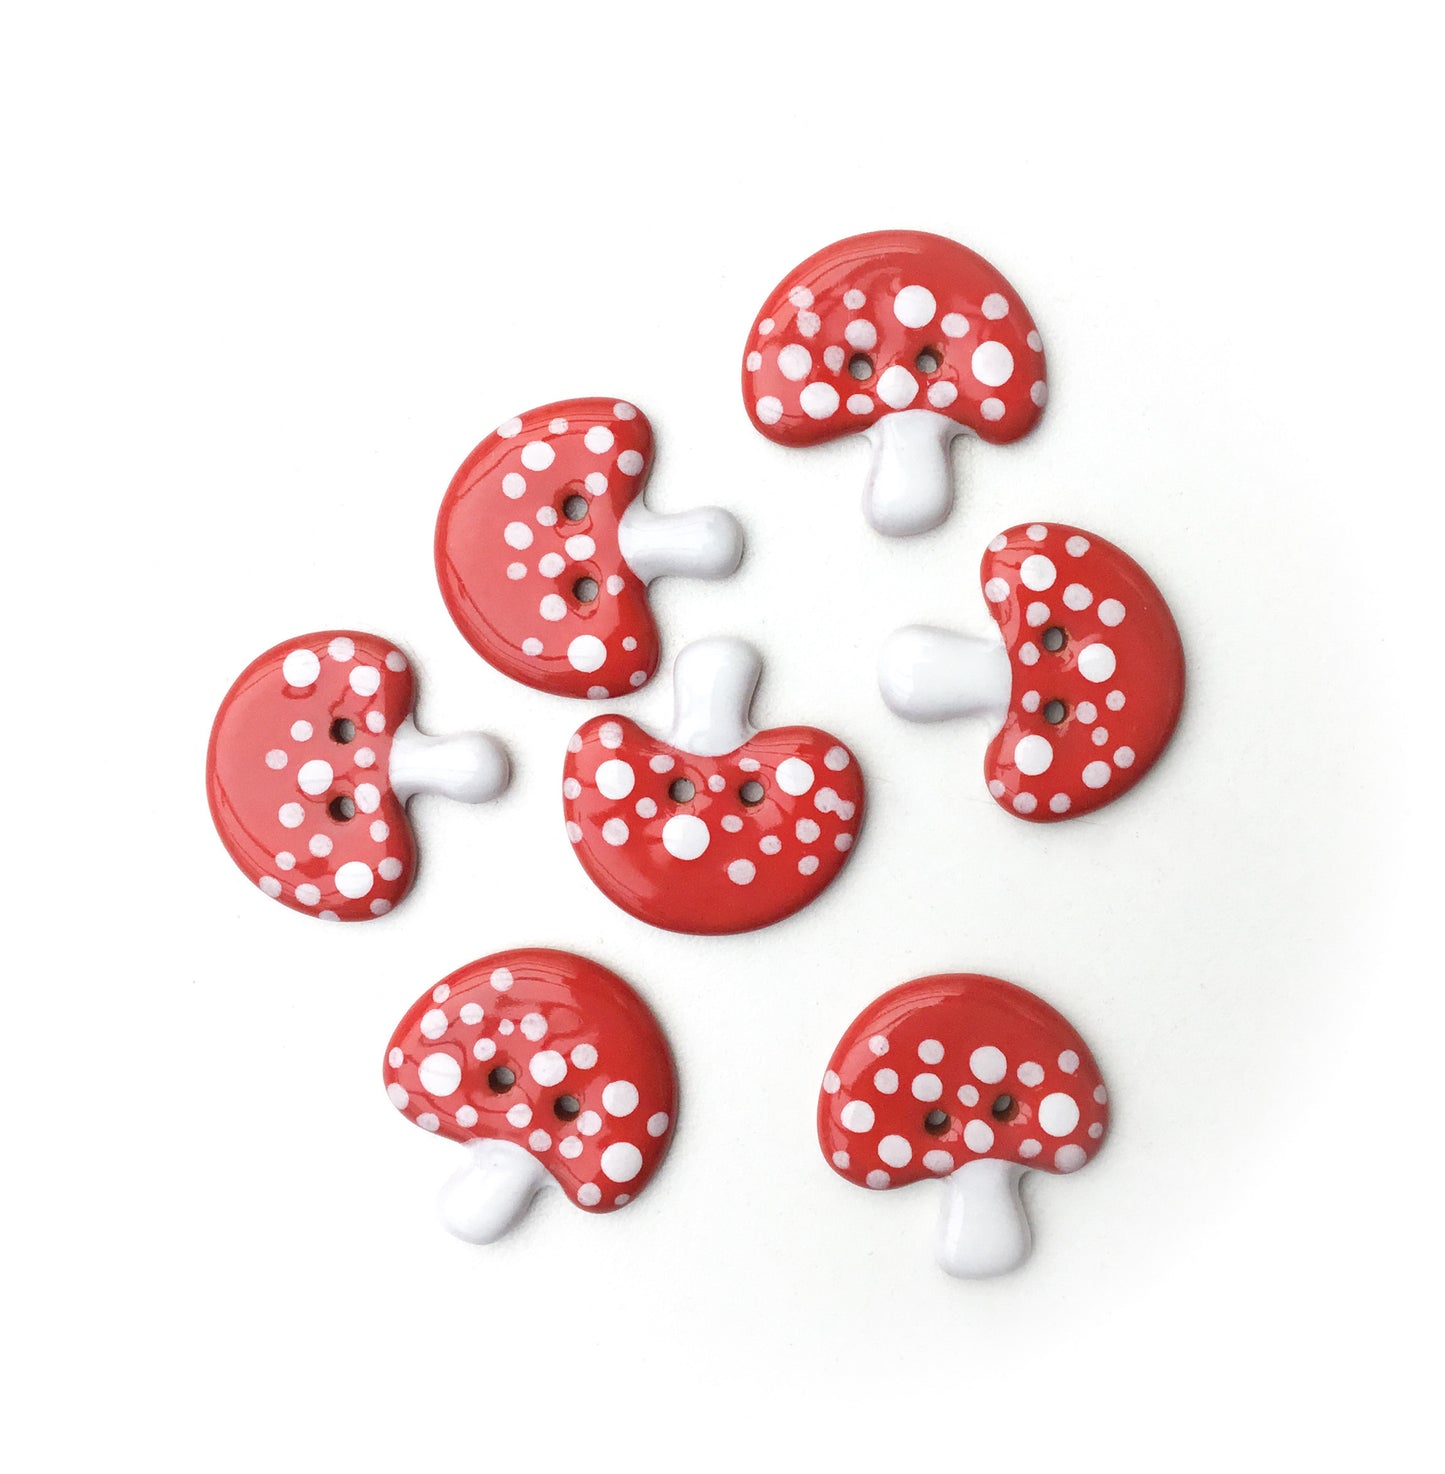 Large Amanita Mushroom Buttons - 1 1/8" x 1 1/16"